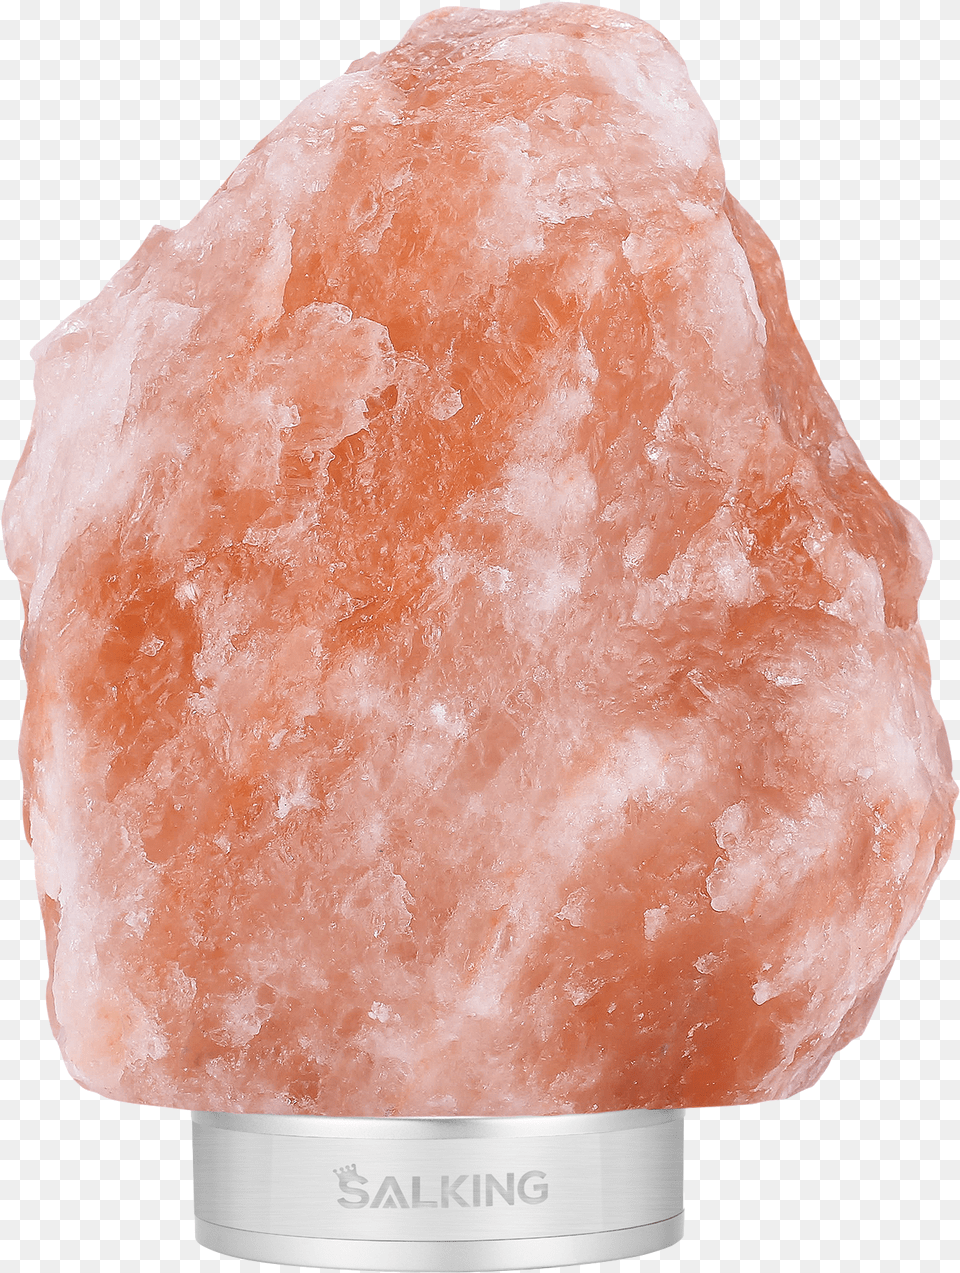 Salking Himalayan Salt Lamp Crystal, Mineral, Quartz, Accessories, Gemstone Png